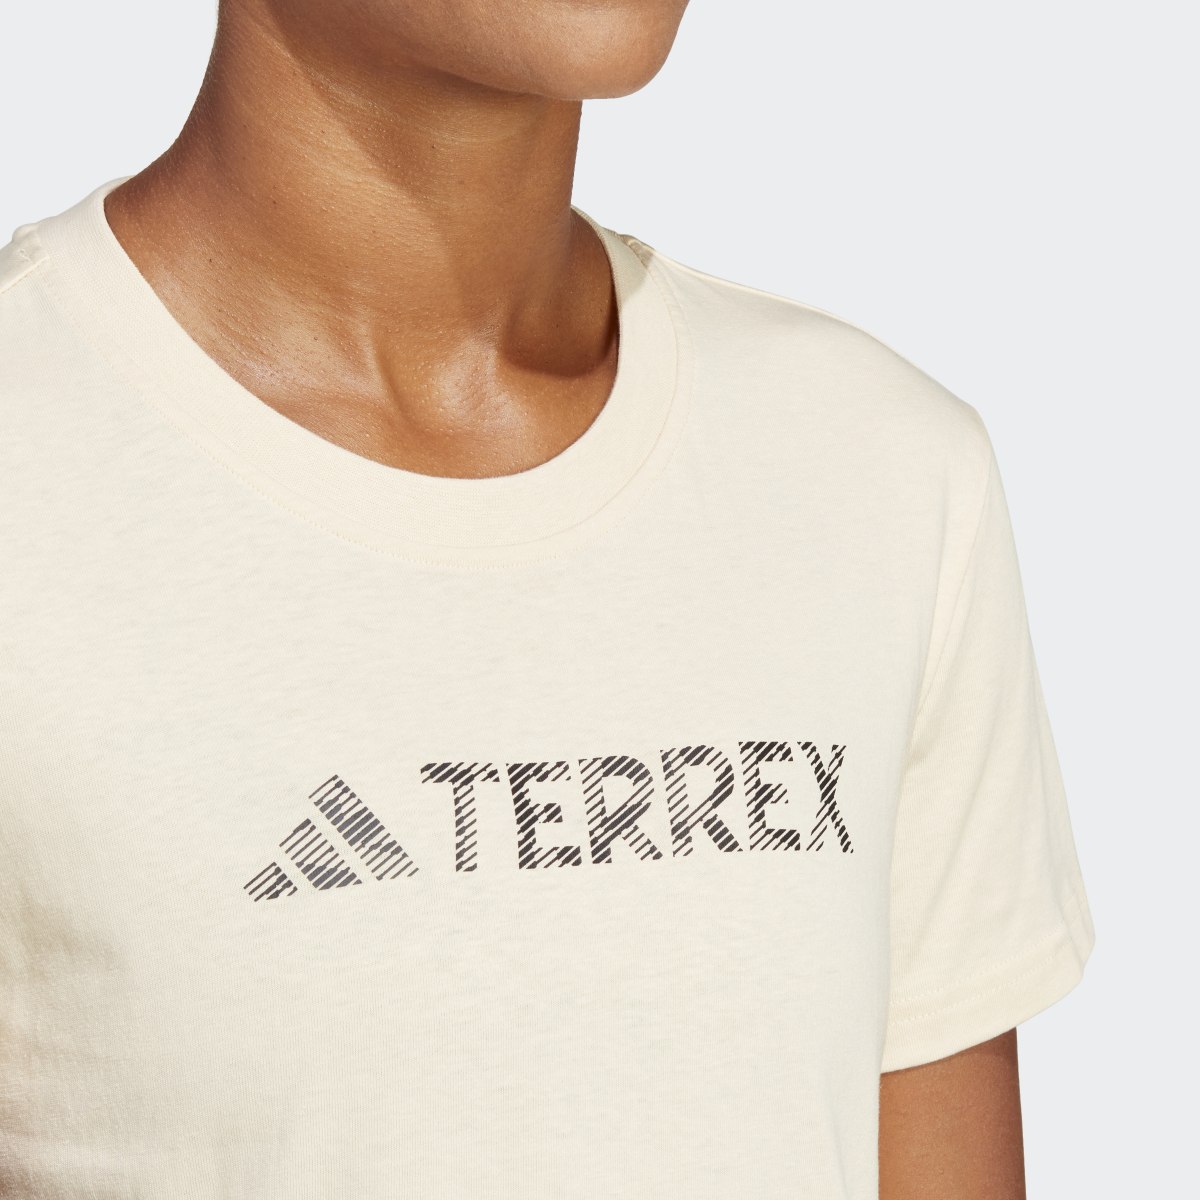 Adidas T-shirt TERREX. 7